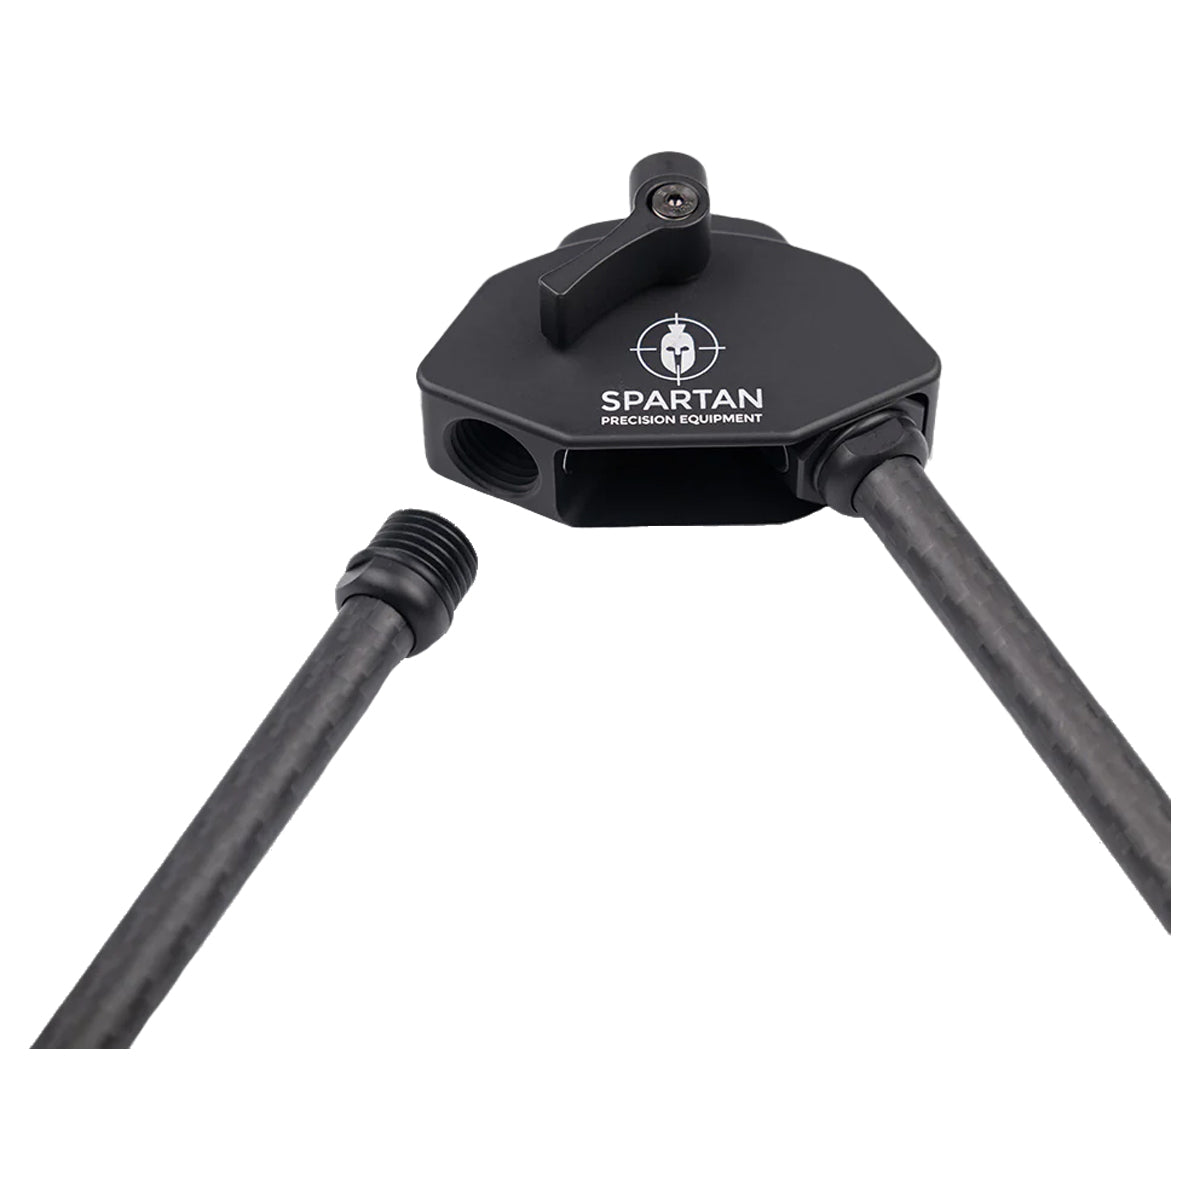 Spartan Precision Equipment Javelin Lite Bipod in  by GOHUNT | Spartan Precision Equipment - GOHUNT Shop